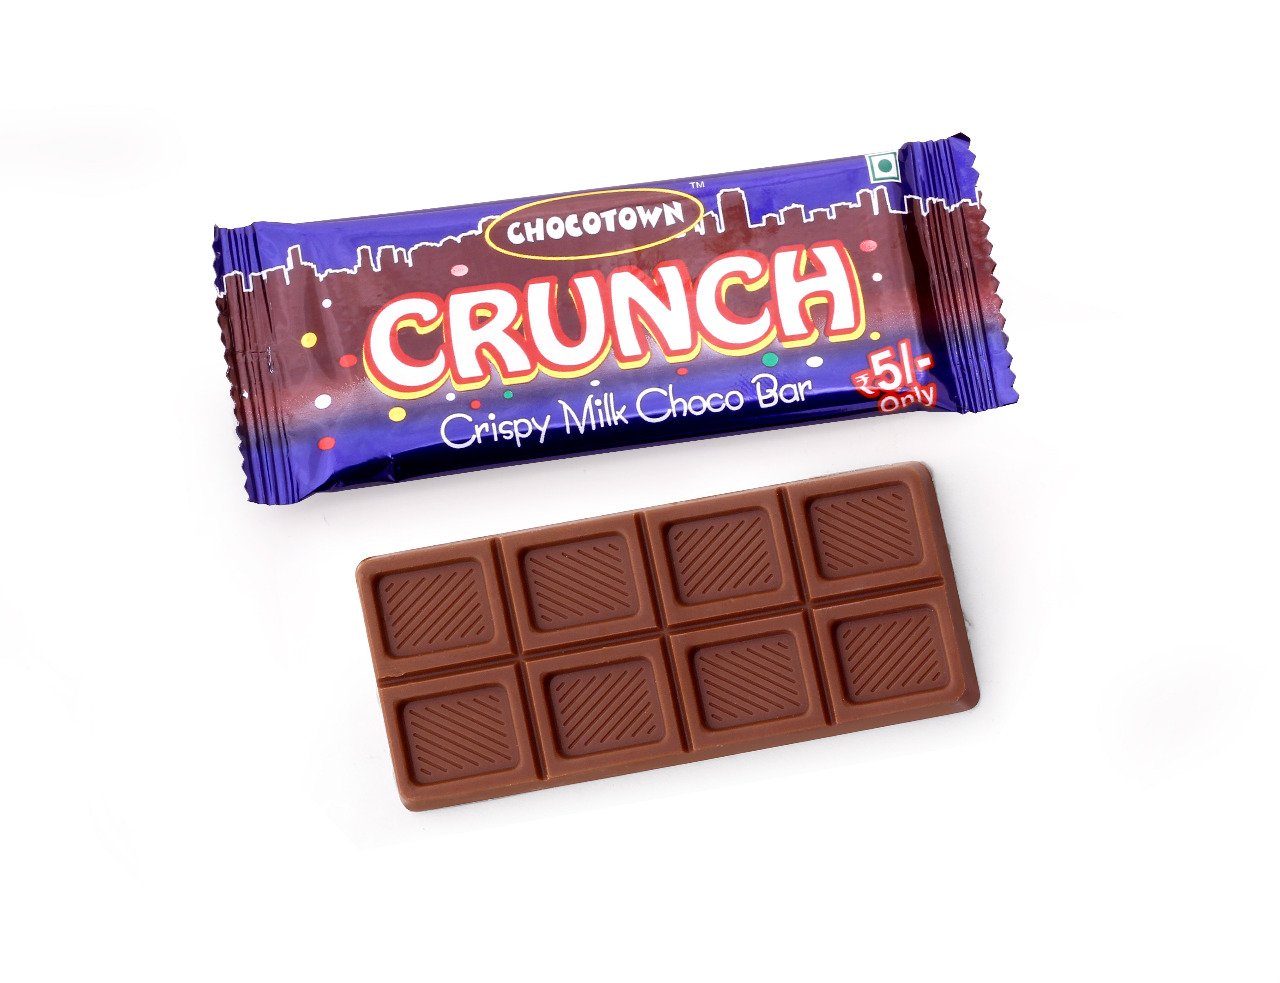 1004 Chocotown Crunch Crispy Milk Chocobar, 15gm - SkyShopy